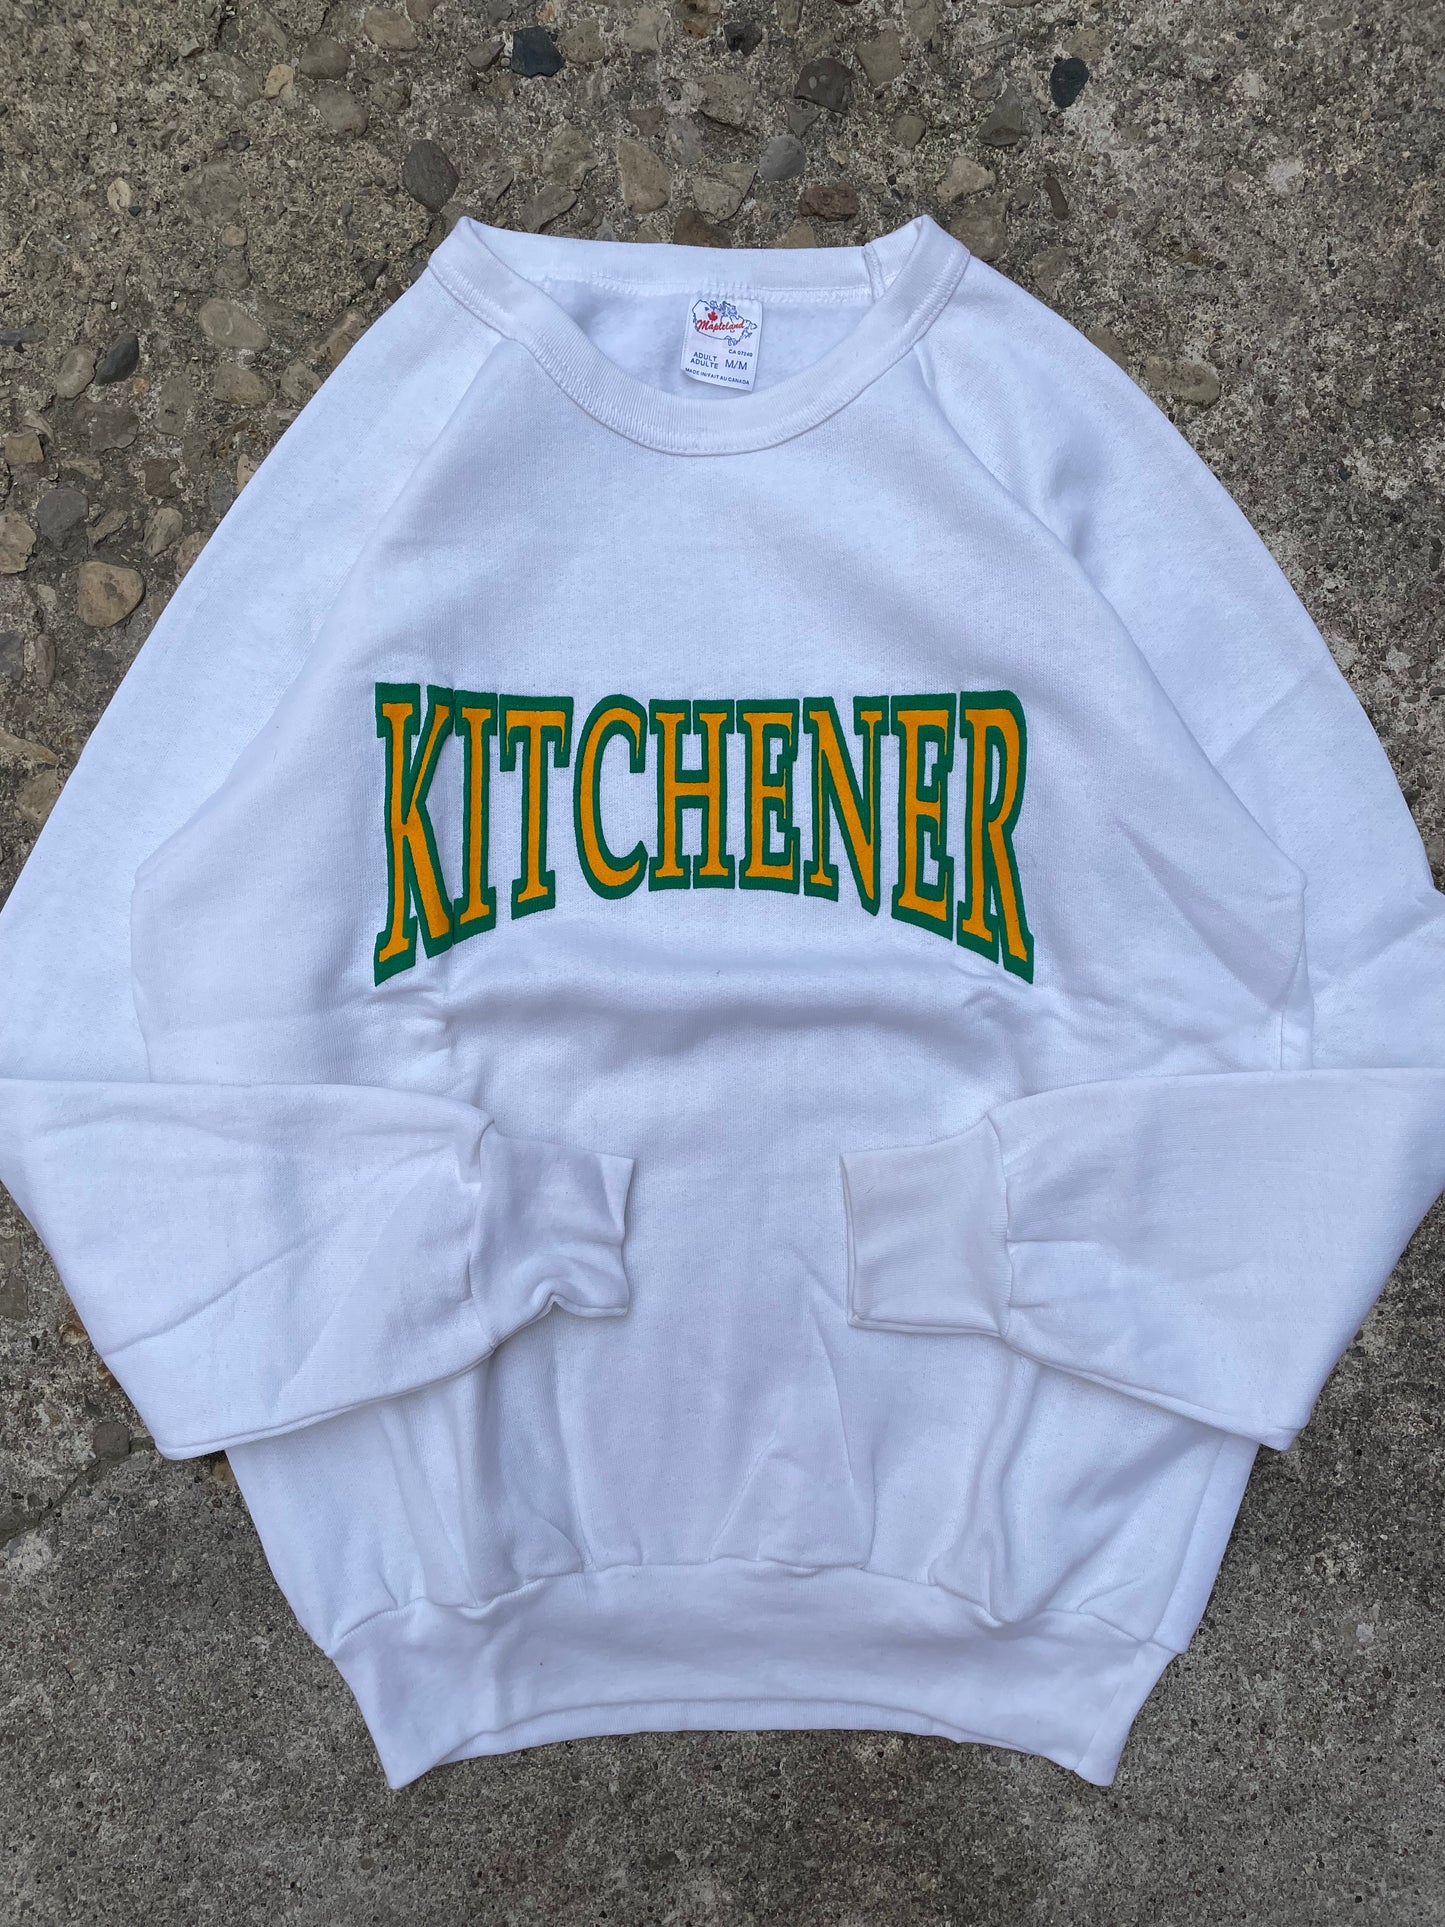 1980's Kitchener Graphic Crewneck Sweatshirt - M